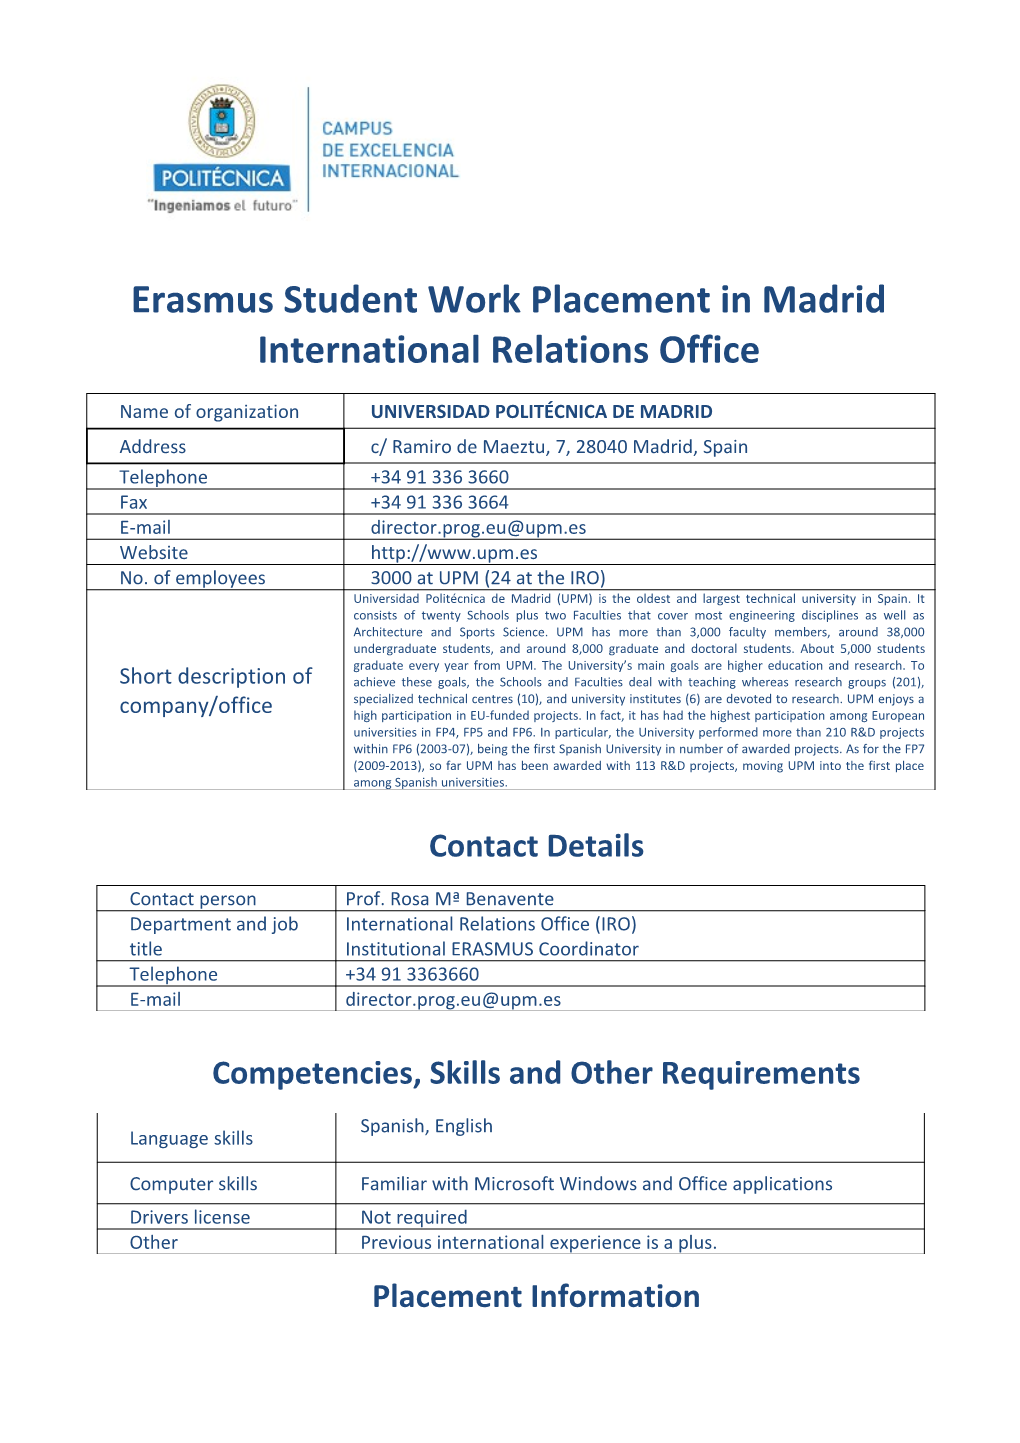 Erasmus Student Work Placement in Madrid International Relations Office